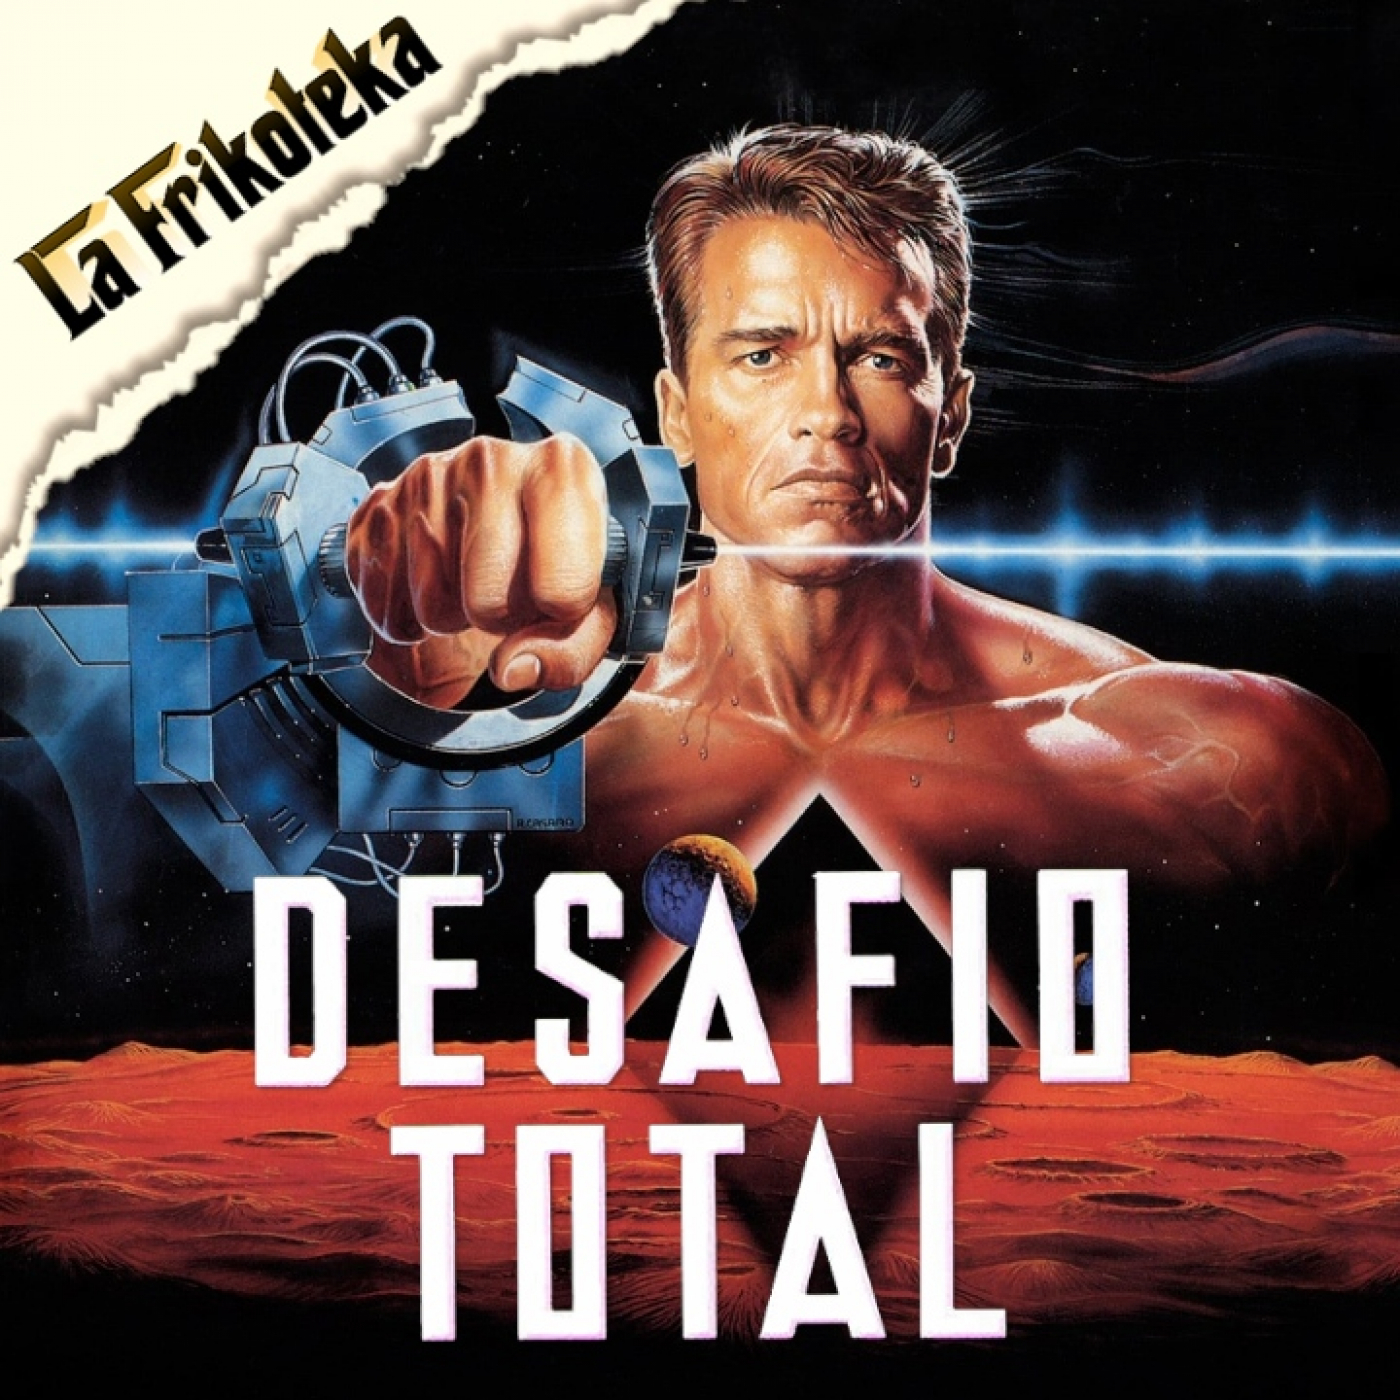 156 - Desafio Total (1990) - Episodio exclusivo para mecenas